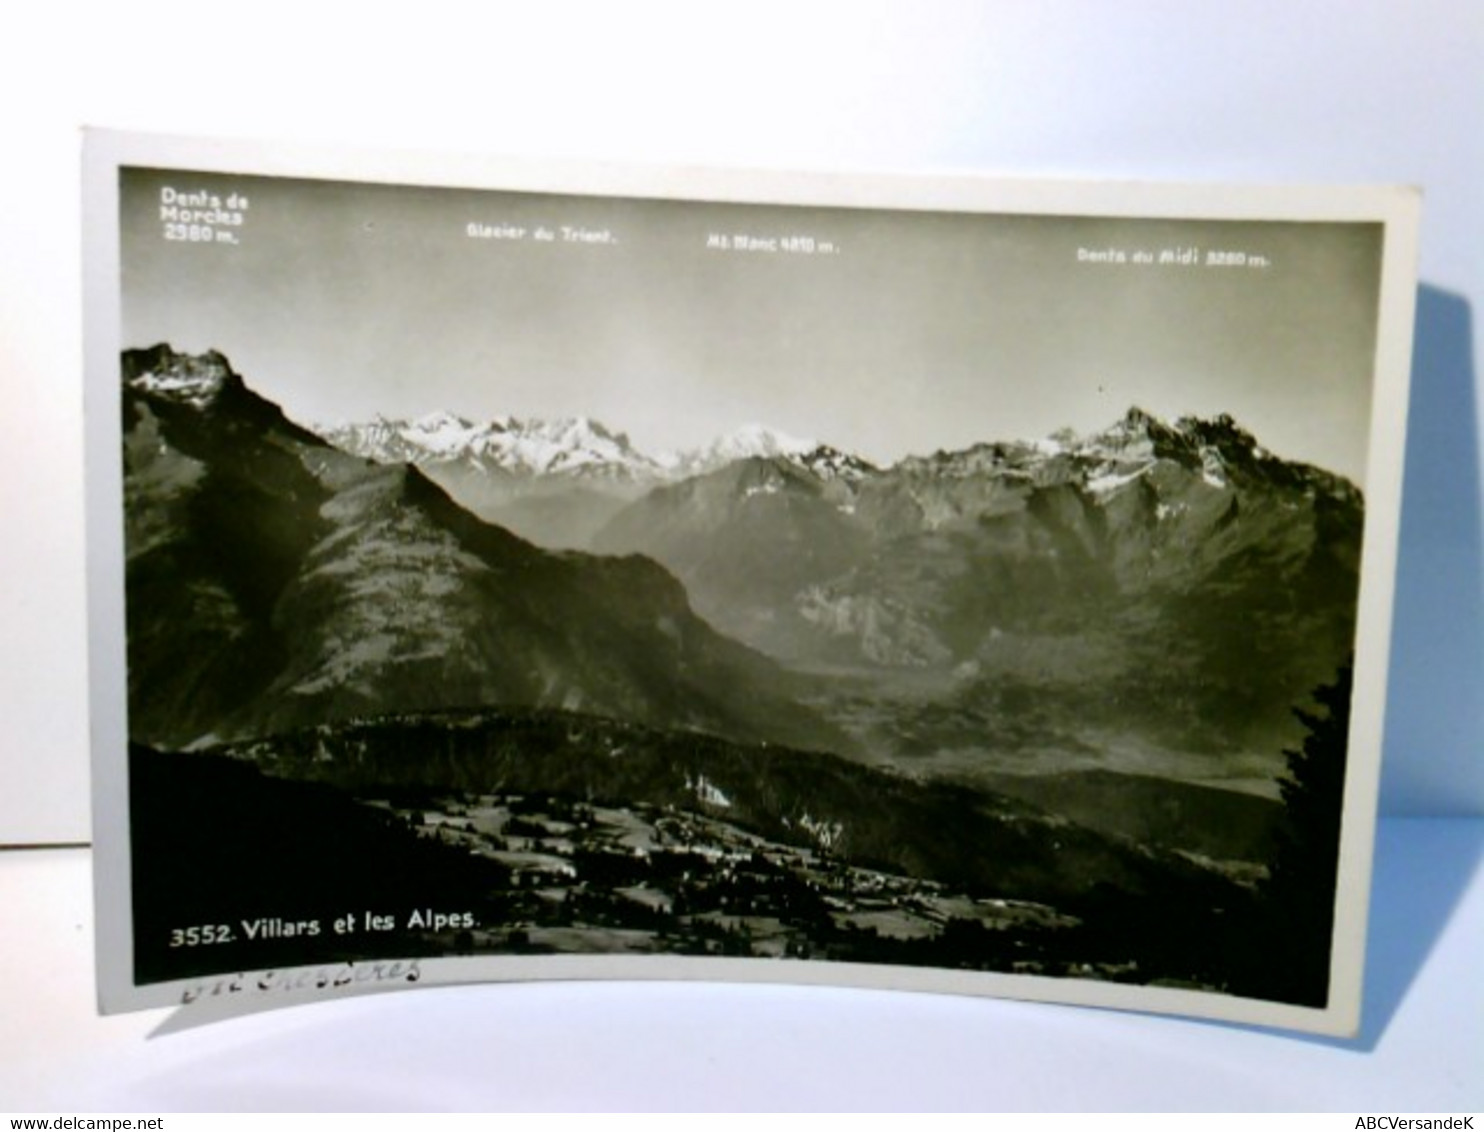 Villars Et Les Alpes. Schweiz. Alte Ansichtskarte / Postkarte S/w. Gel. 1934. Landschaft Im Tale Mit Ort, Bena - Villars-les-Moines